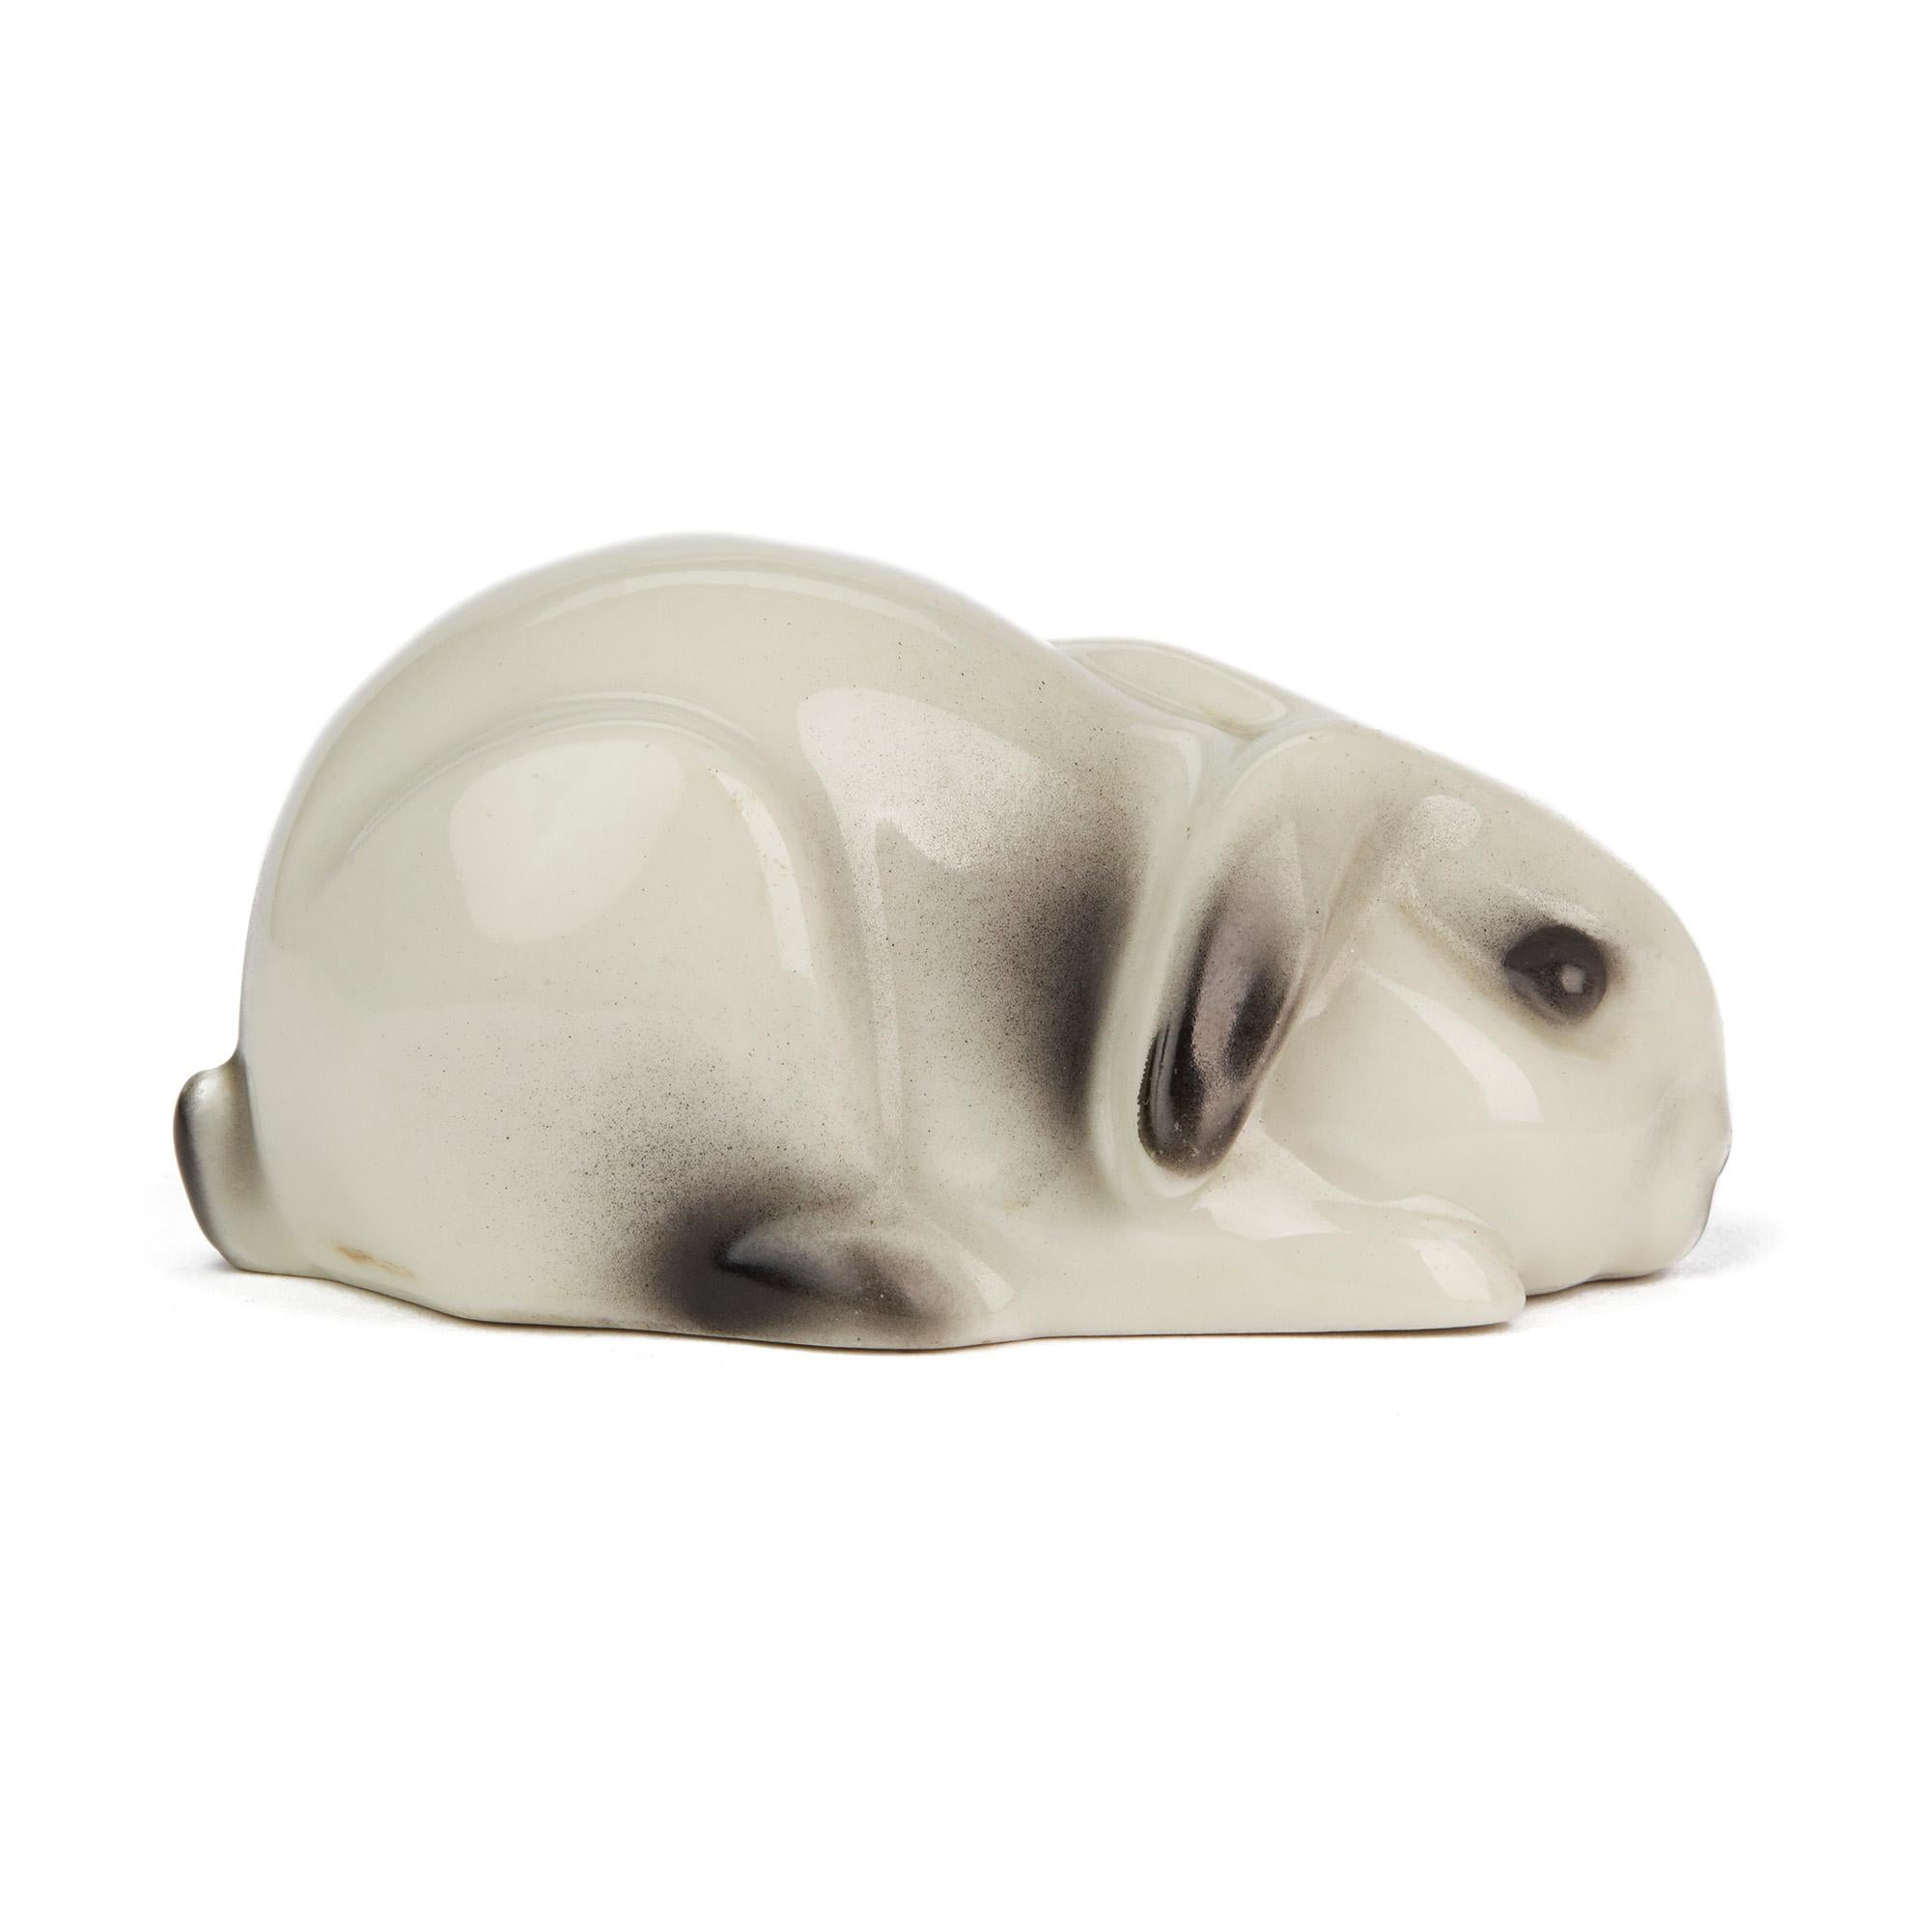 Edouard Marcel Sandoz Swiss Langenthal Porcelain Lying Rabbit Figure, 1948 In Good Condition For Sale In Bishop's Stortford, Hertfordshire